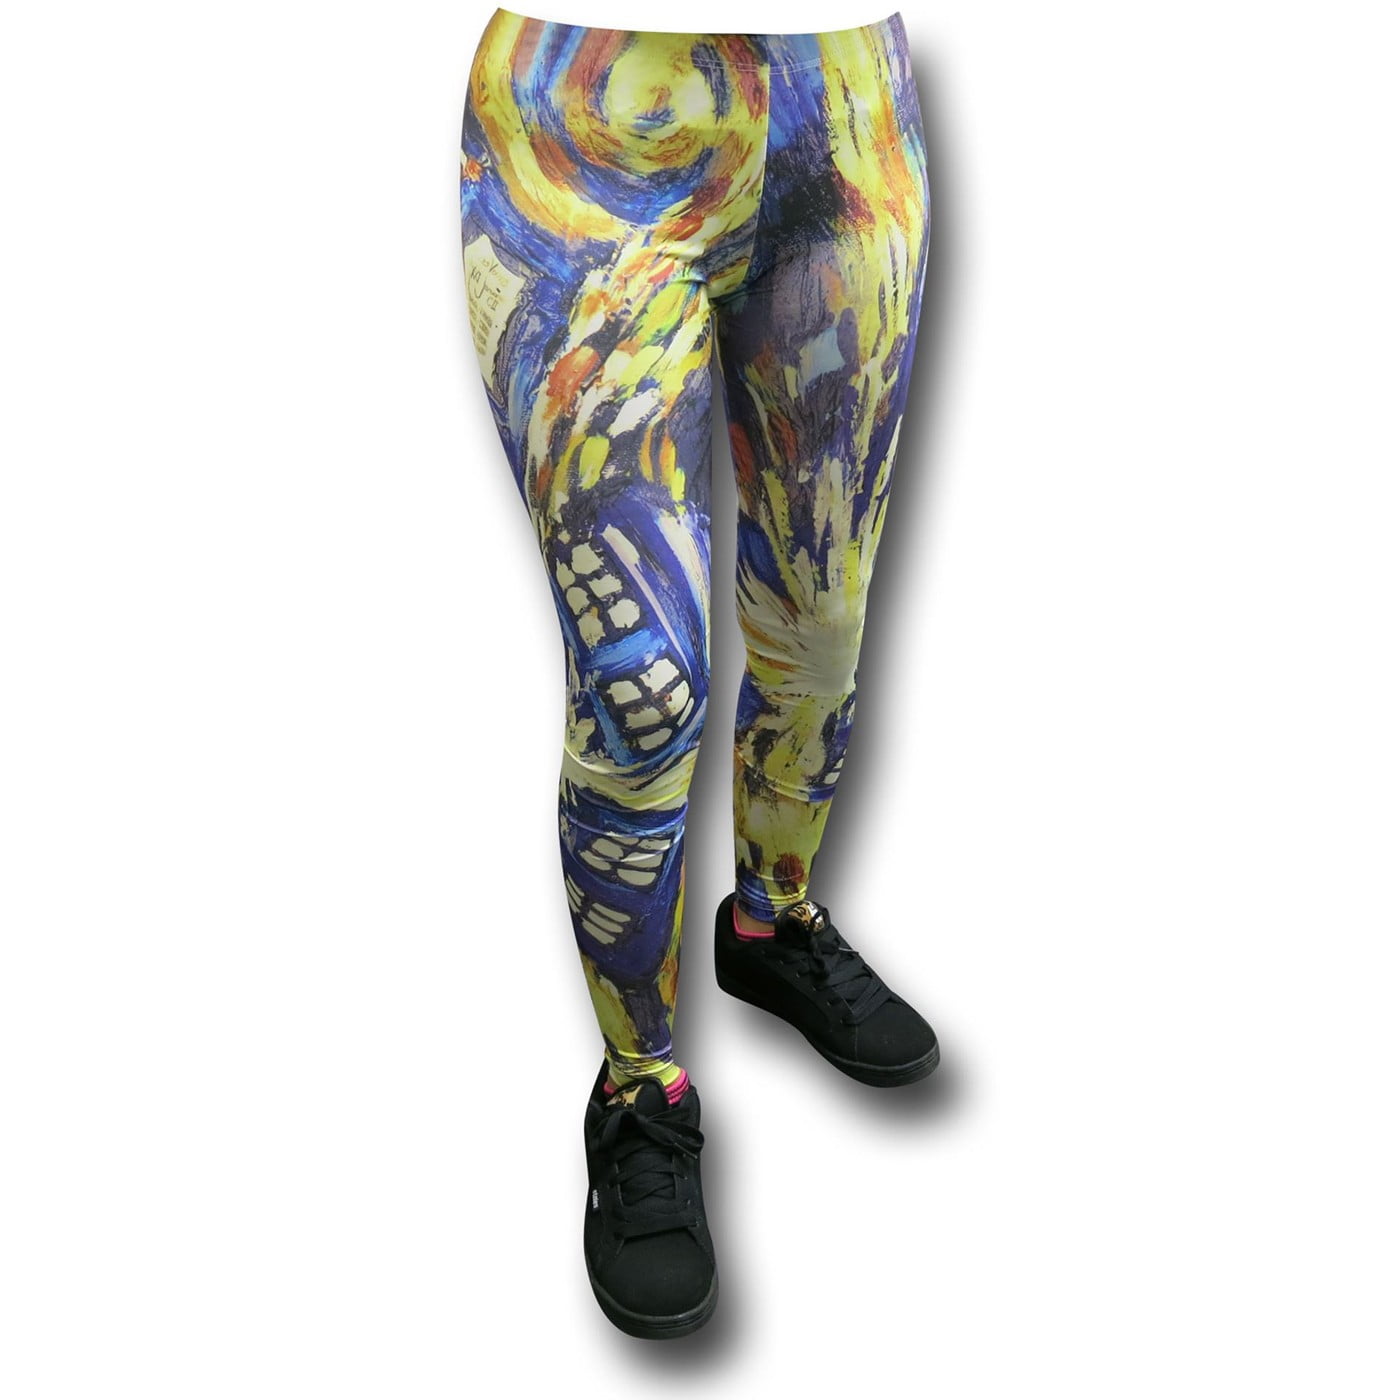 Lumana Leakproof Yoga Pant Leggings, 22 Inseam, Plum, 3X, Single Pair